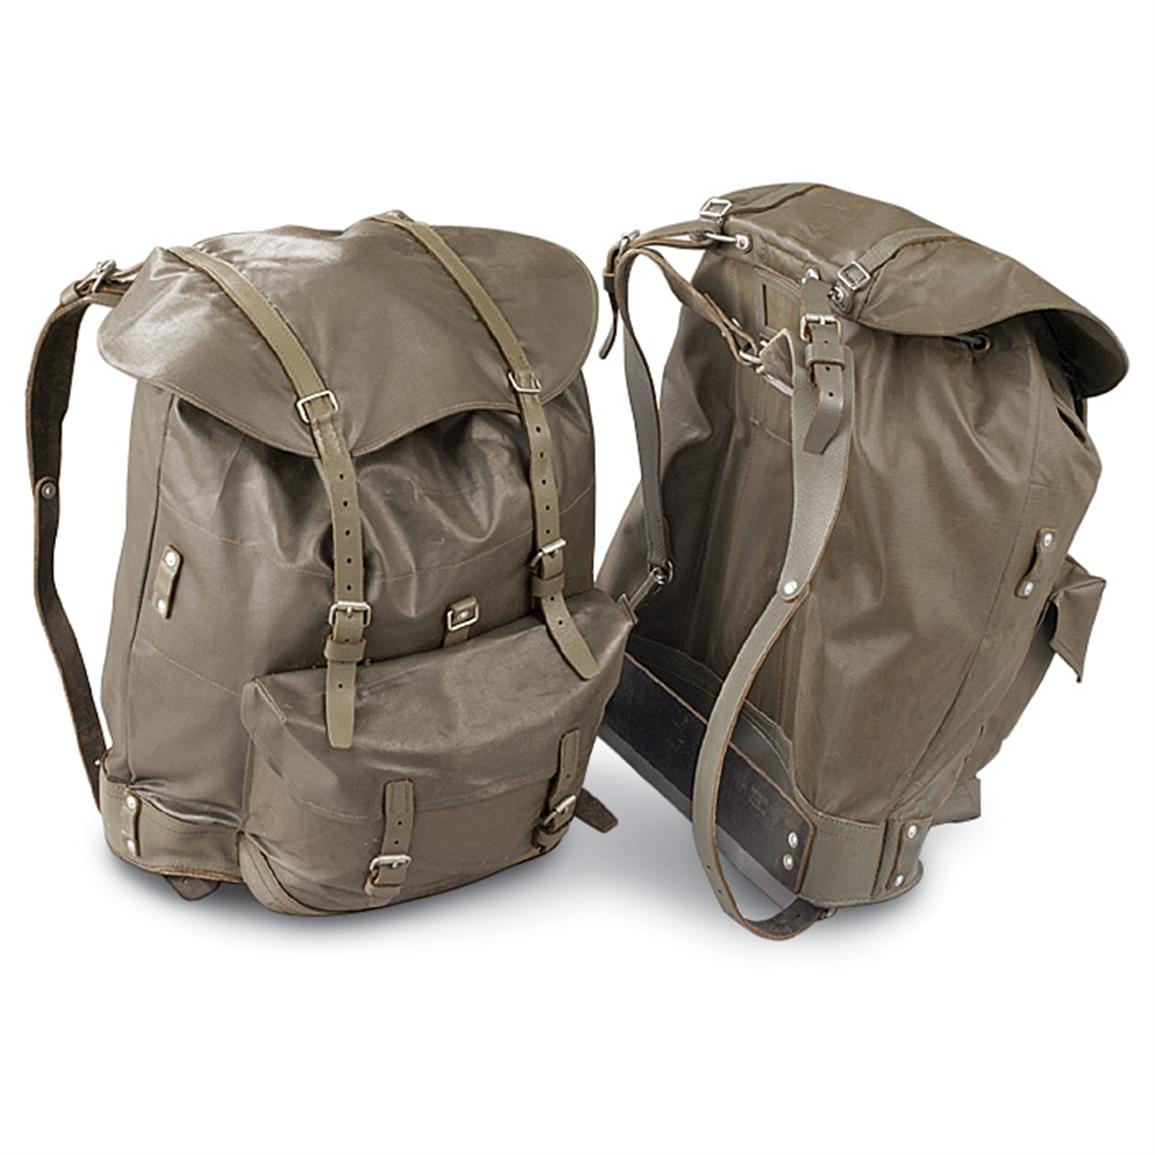 3 Used Swiss Military Backpacks, Olive Drab - 140914, Rucksacks & Backpacks at Sportsman&#39;s Guide